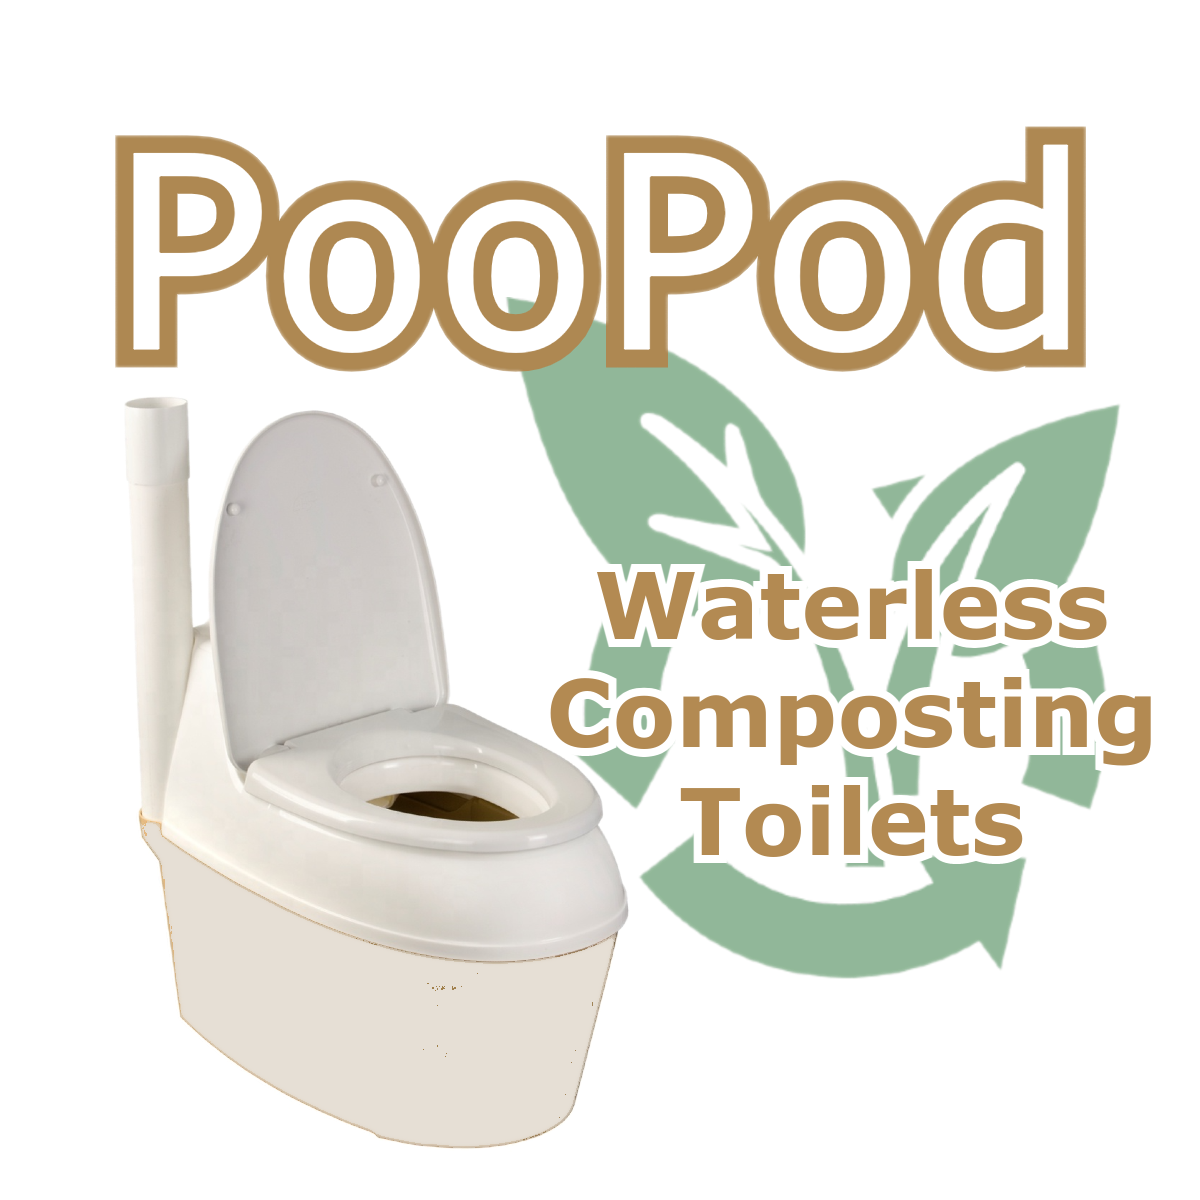 Poo Pod Waterless Composting Toilets